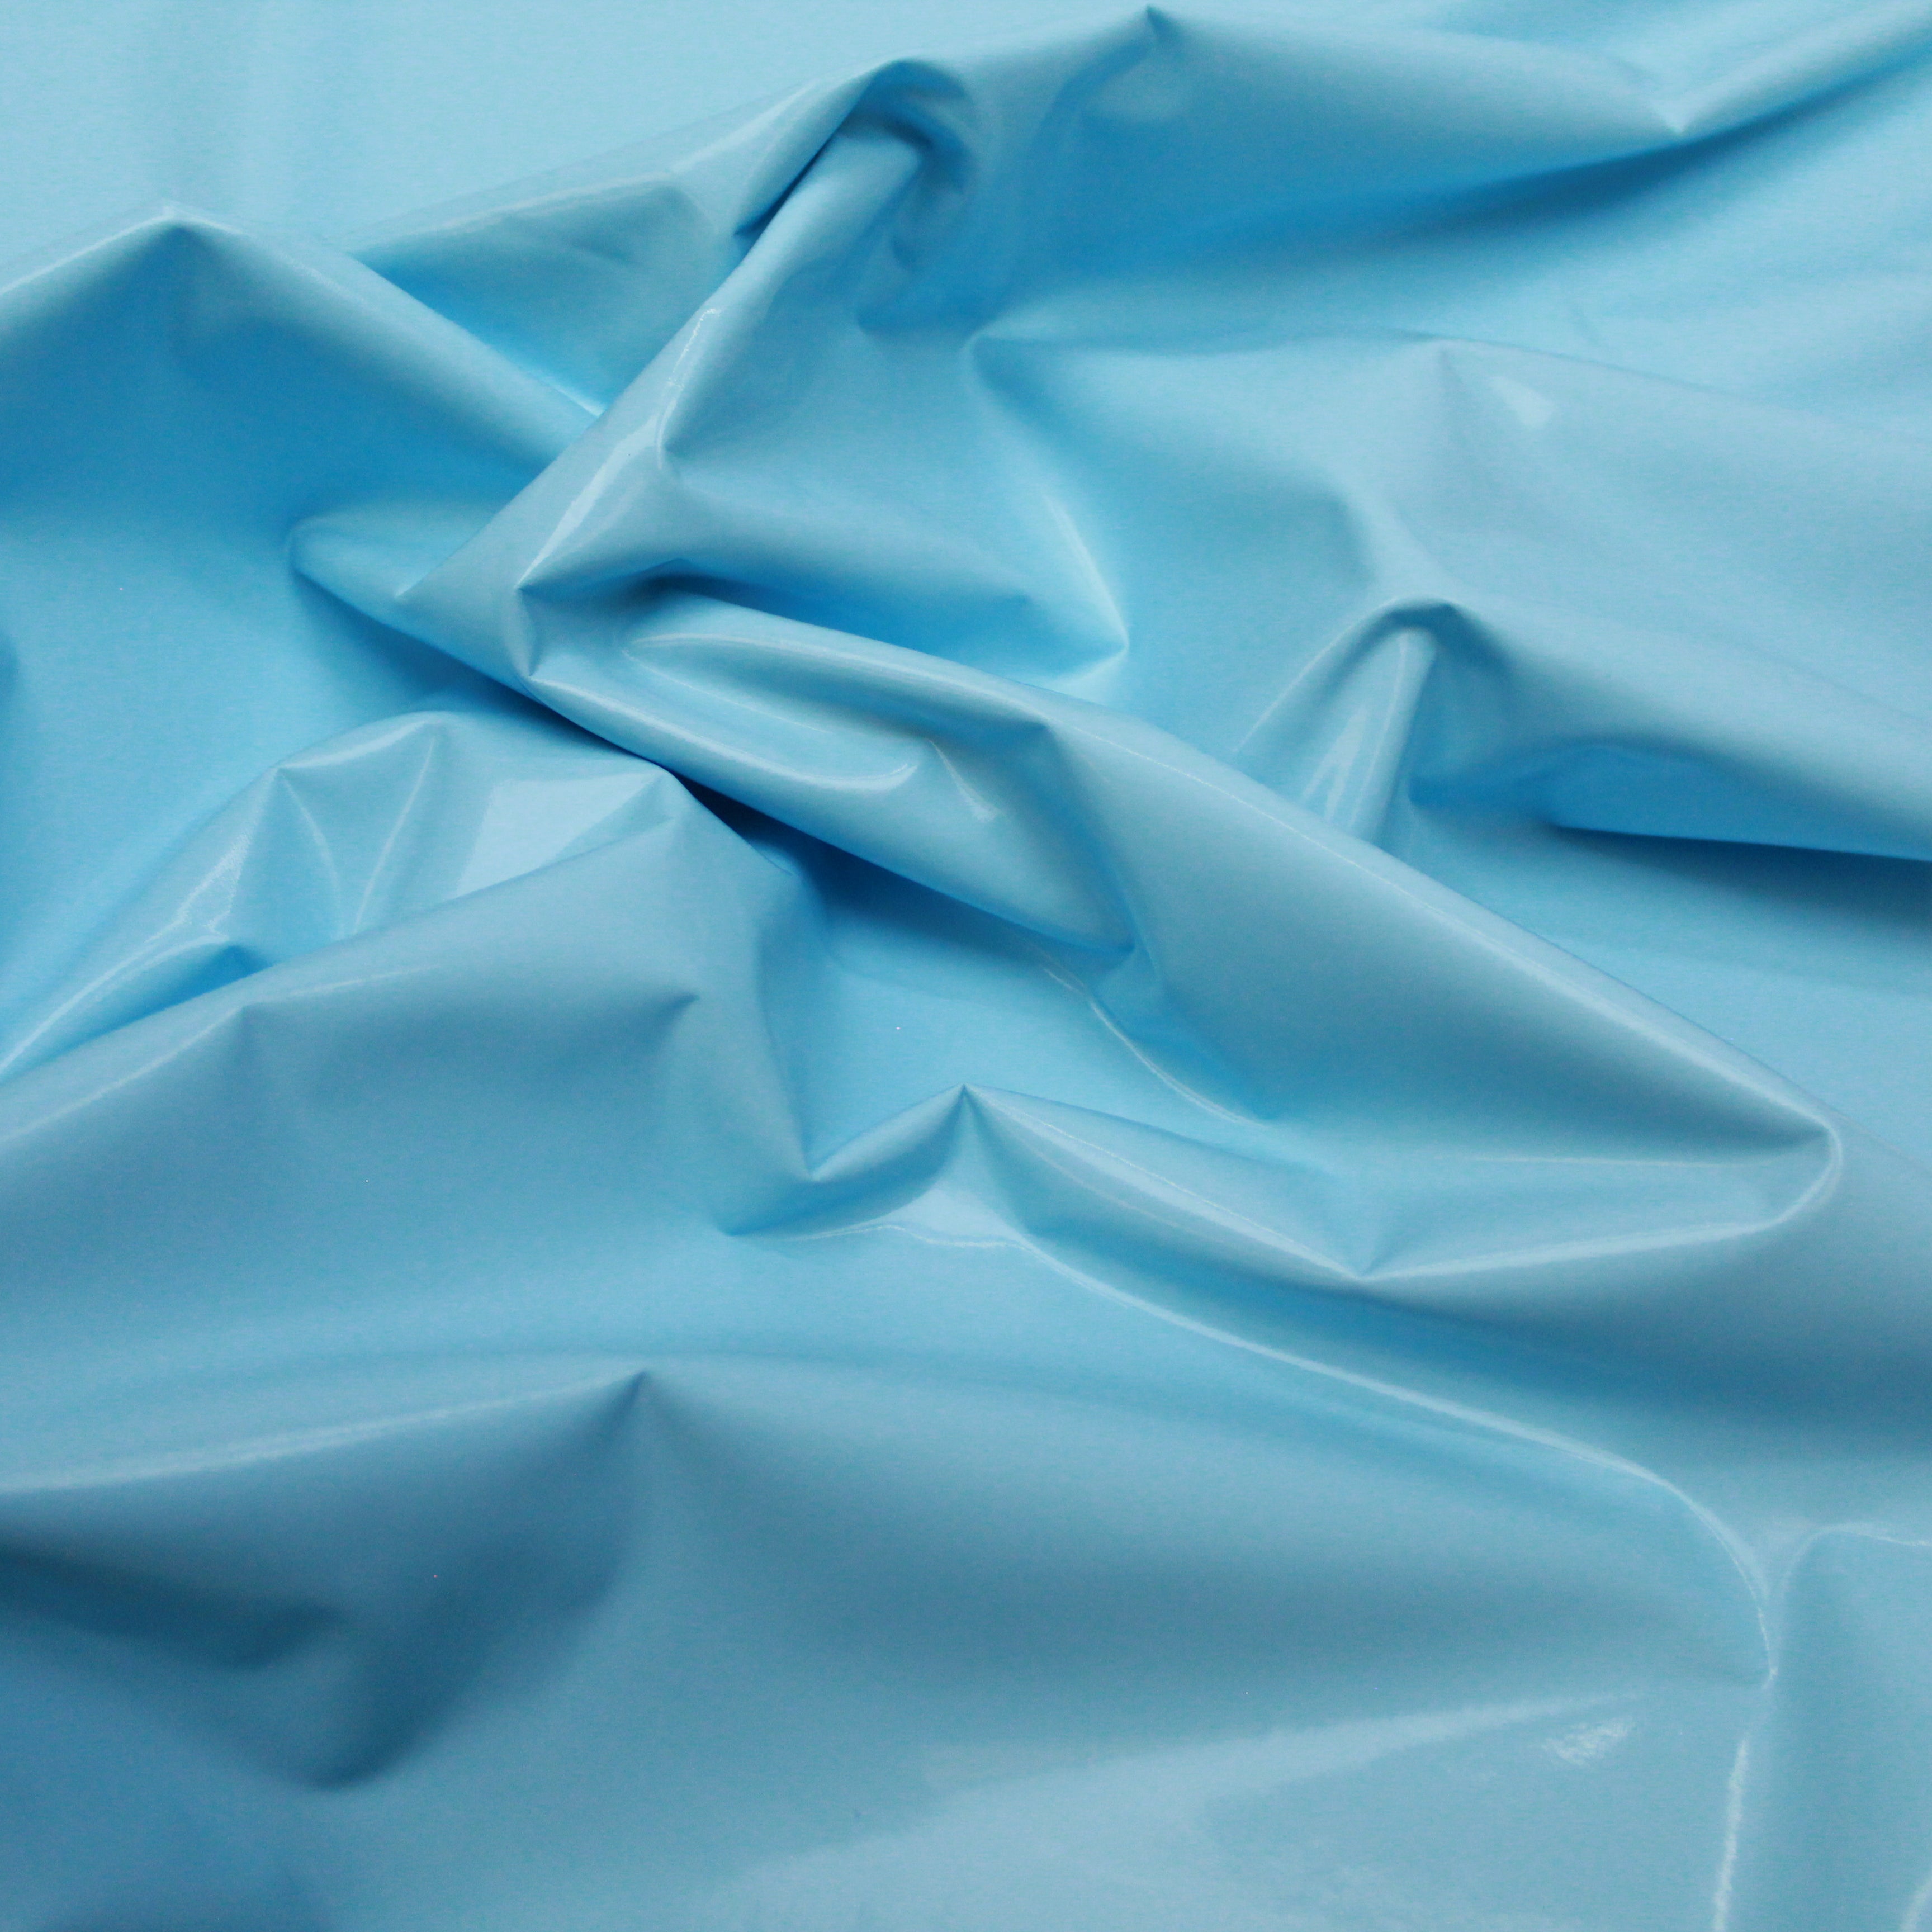 Premium Quality Luxury High Gloss Soft PVC Vinyl Fabric 55" Wide - Sky Blue